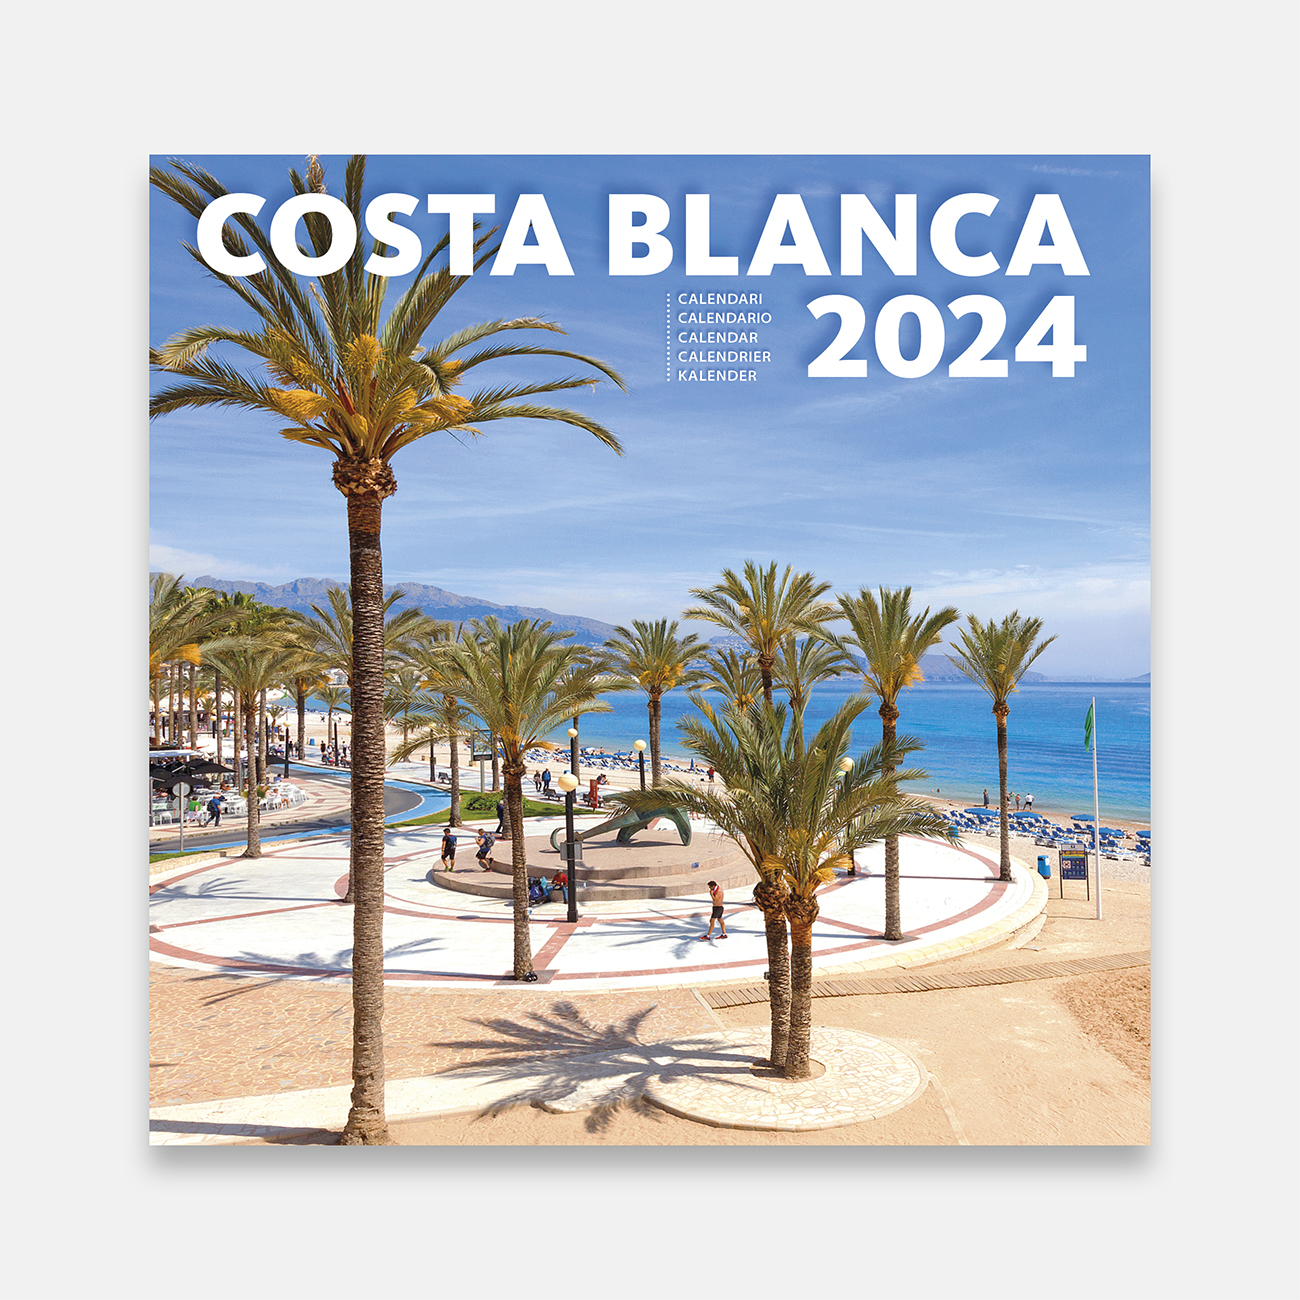 Calendrier 2025 Costa Blanca 25bl b calendario pared 2025 costa blanca